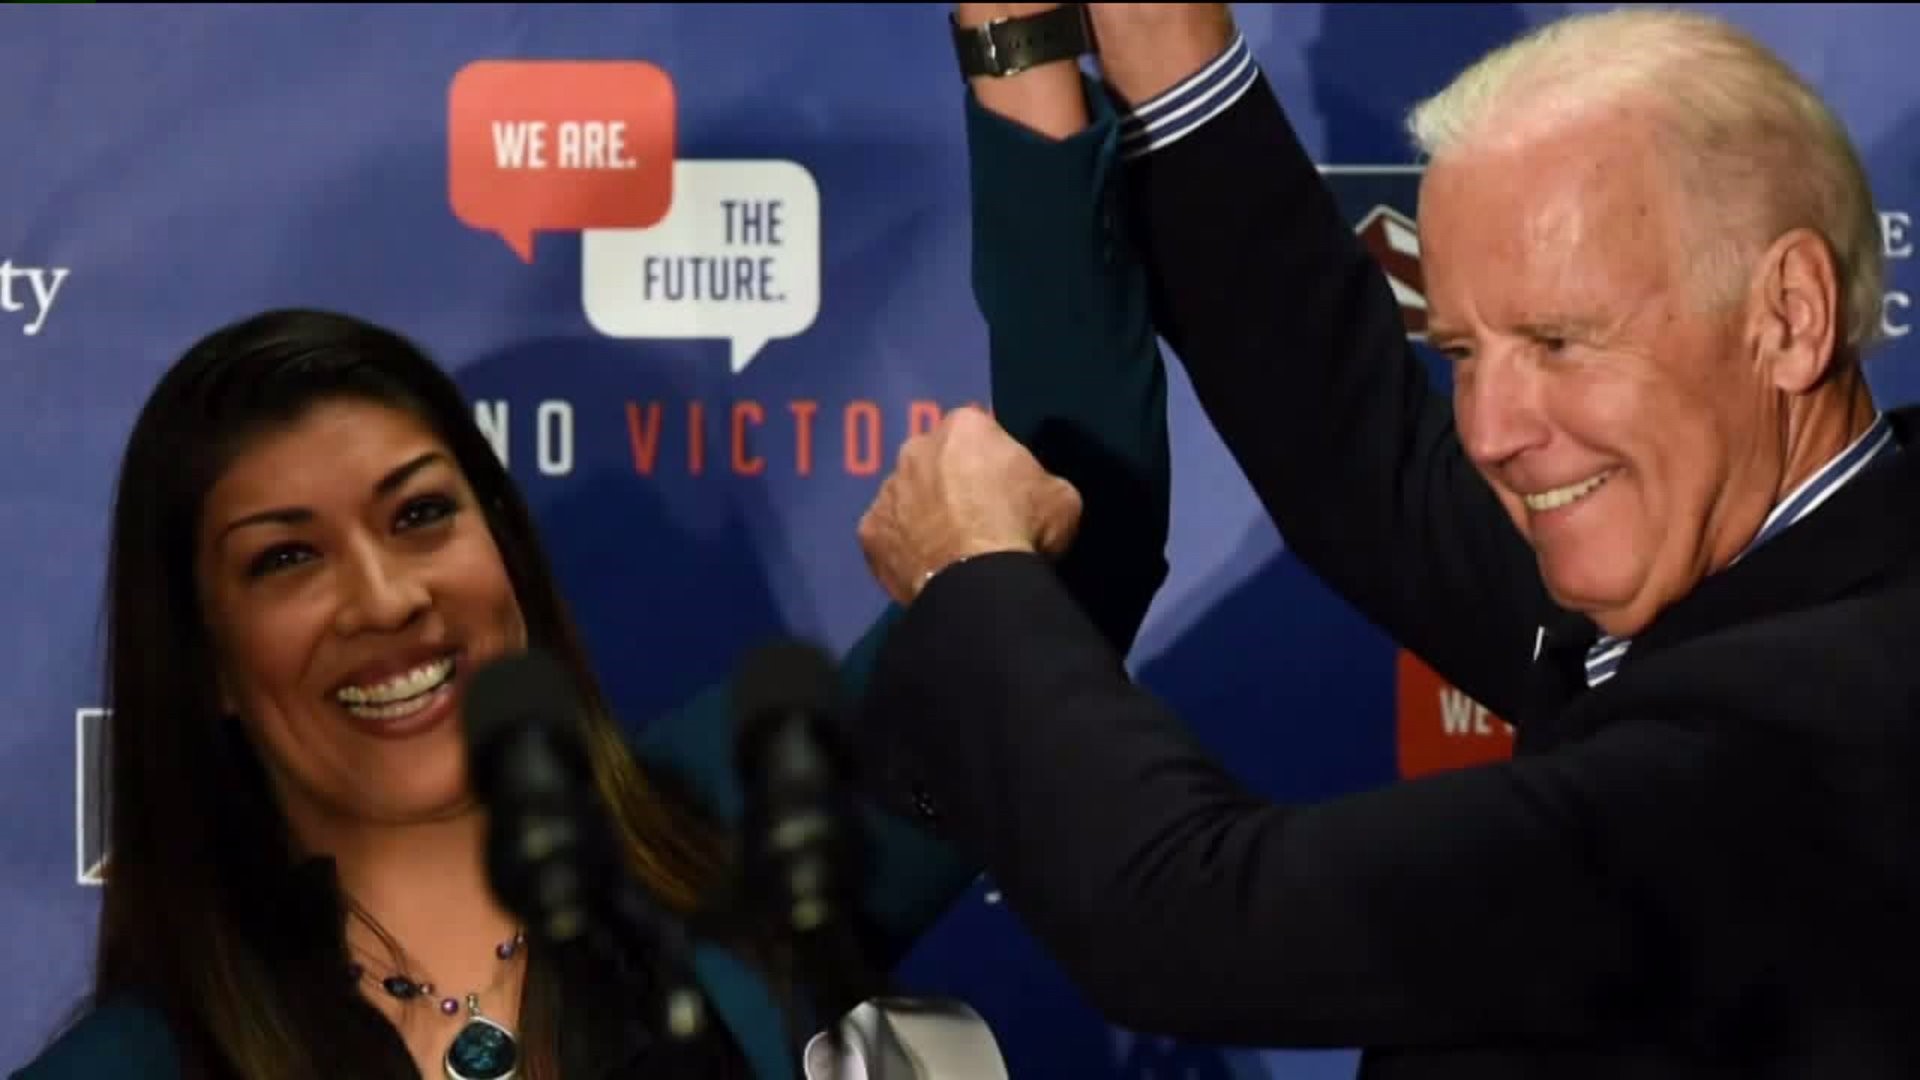 Joe Biden Appears to Joke About Accusations During Speech